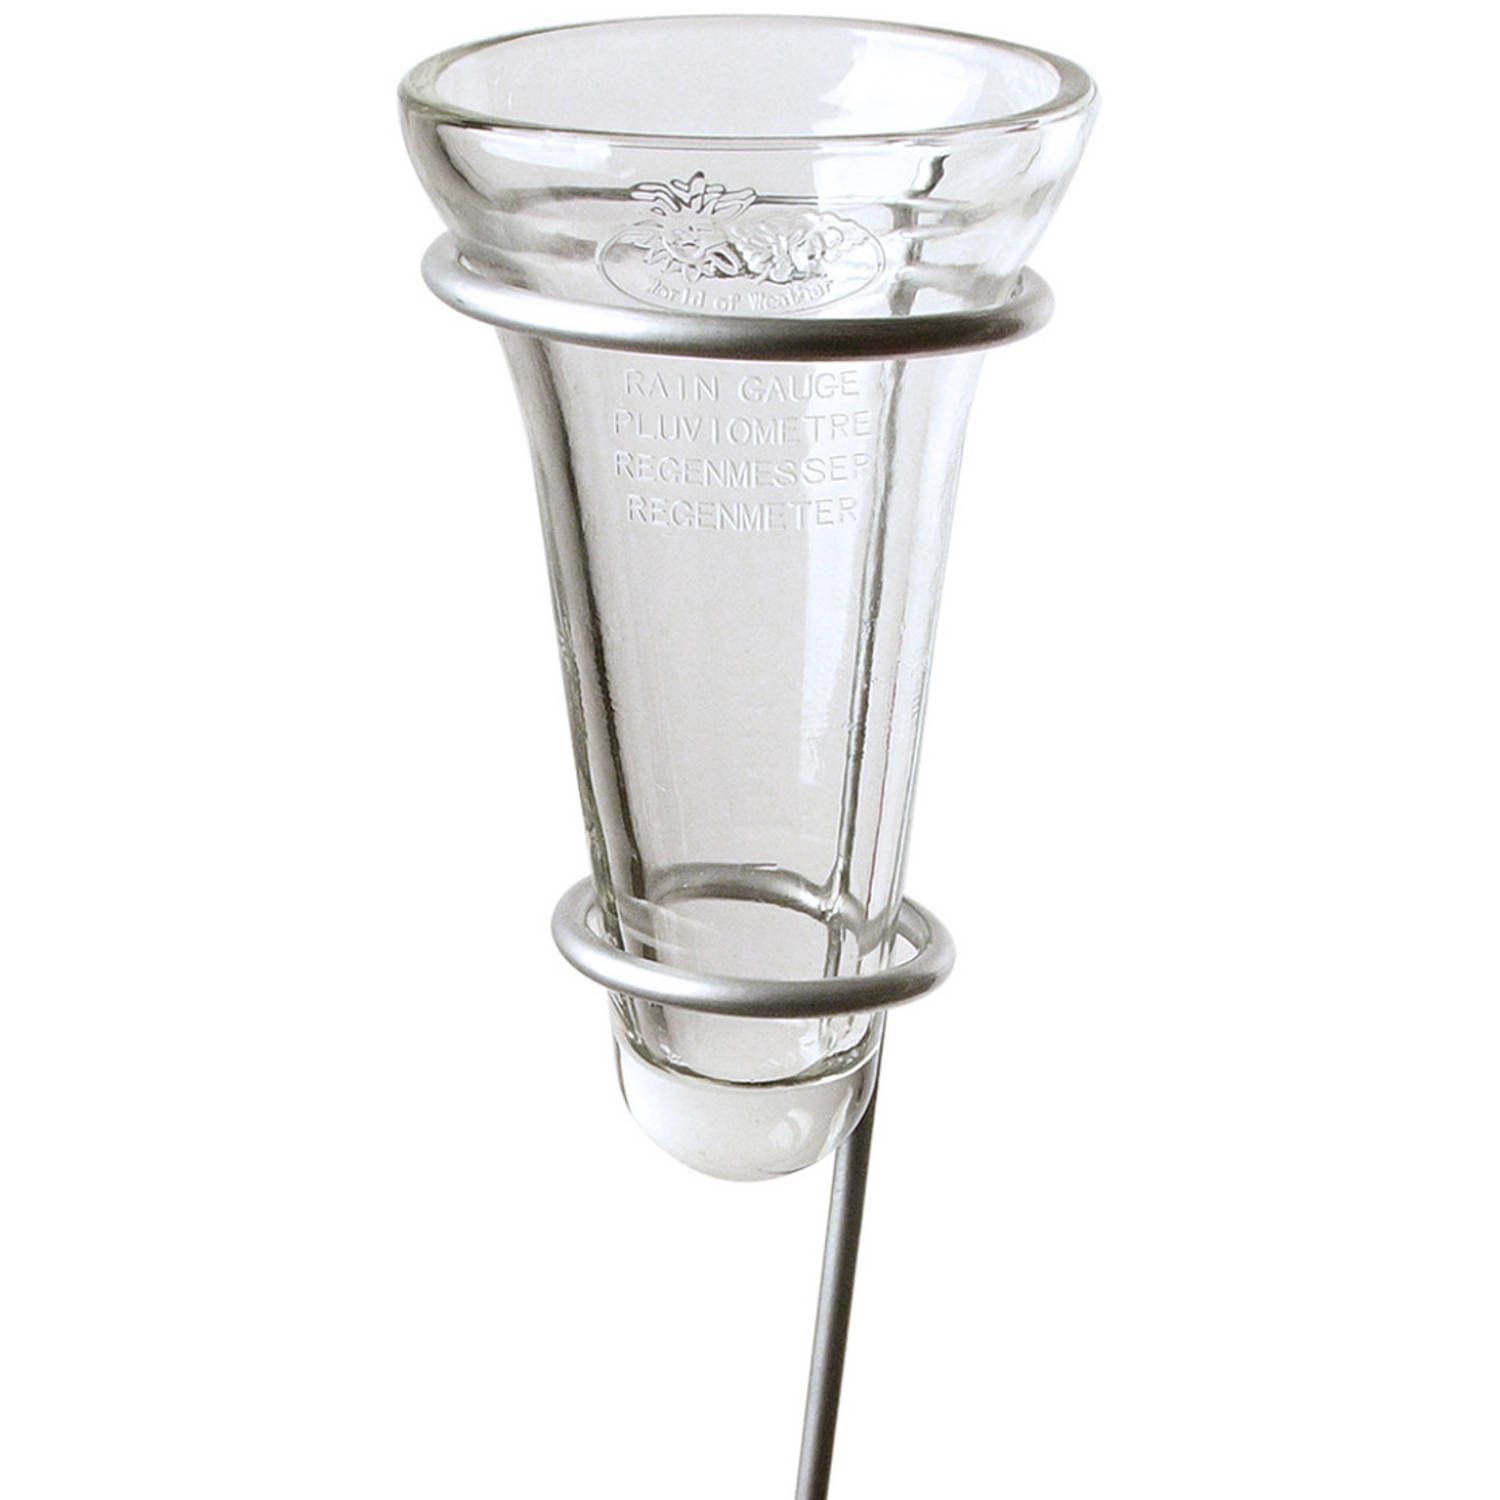 1x Regenmeter-neerslagmeter Glas Met Verzinkte Grondpen 69 Cm Tuinartikelen Regenmeters-neerslagmete